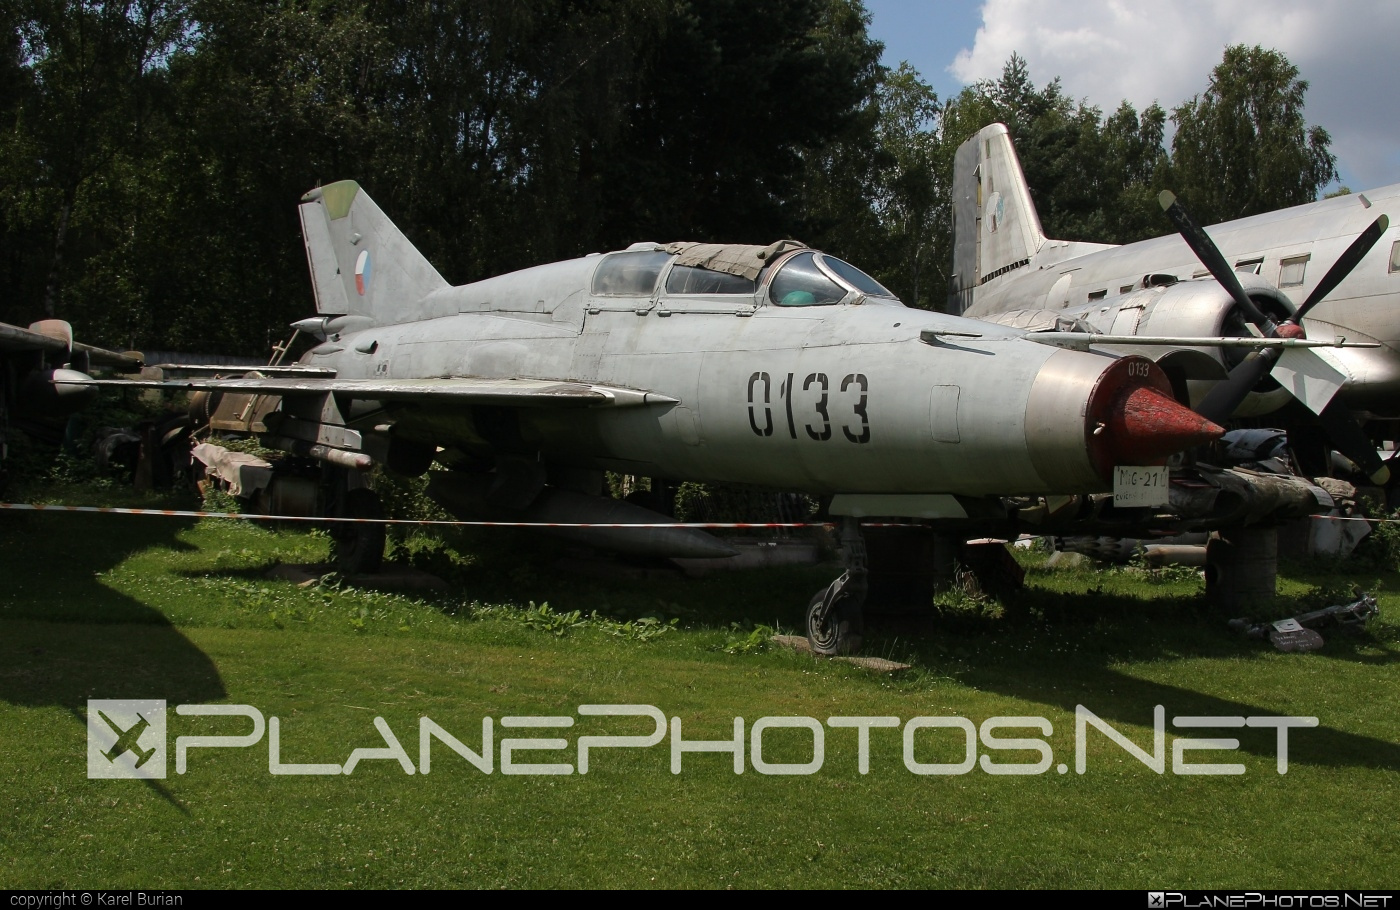 Mikoyan-Gurevich MiG-21US - 0133 operated by Vzdušné síly AČR (Czech Air Force) #czechairforce #mig #mig21 #mig21us #mikoyangurevich #vzdusnesilyacr